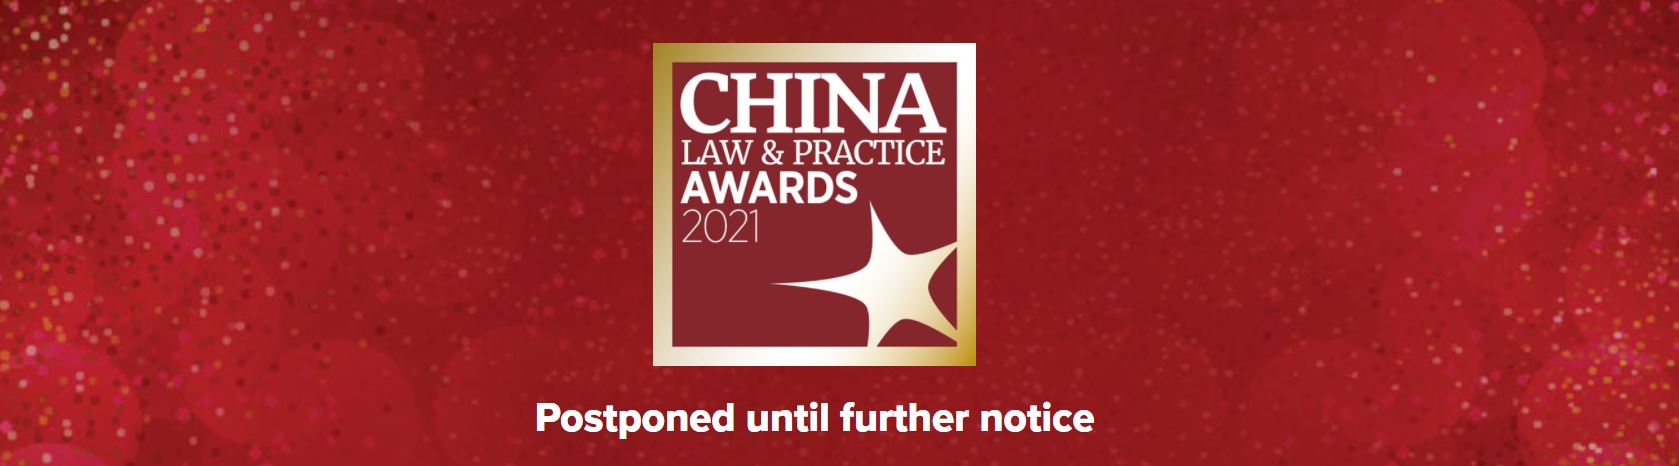 China Law & Practice Awards 2021 Postponed